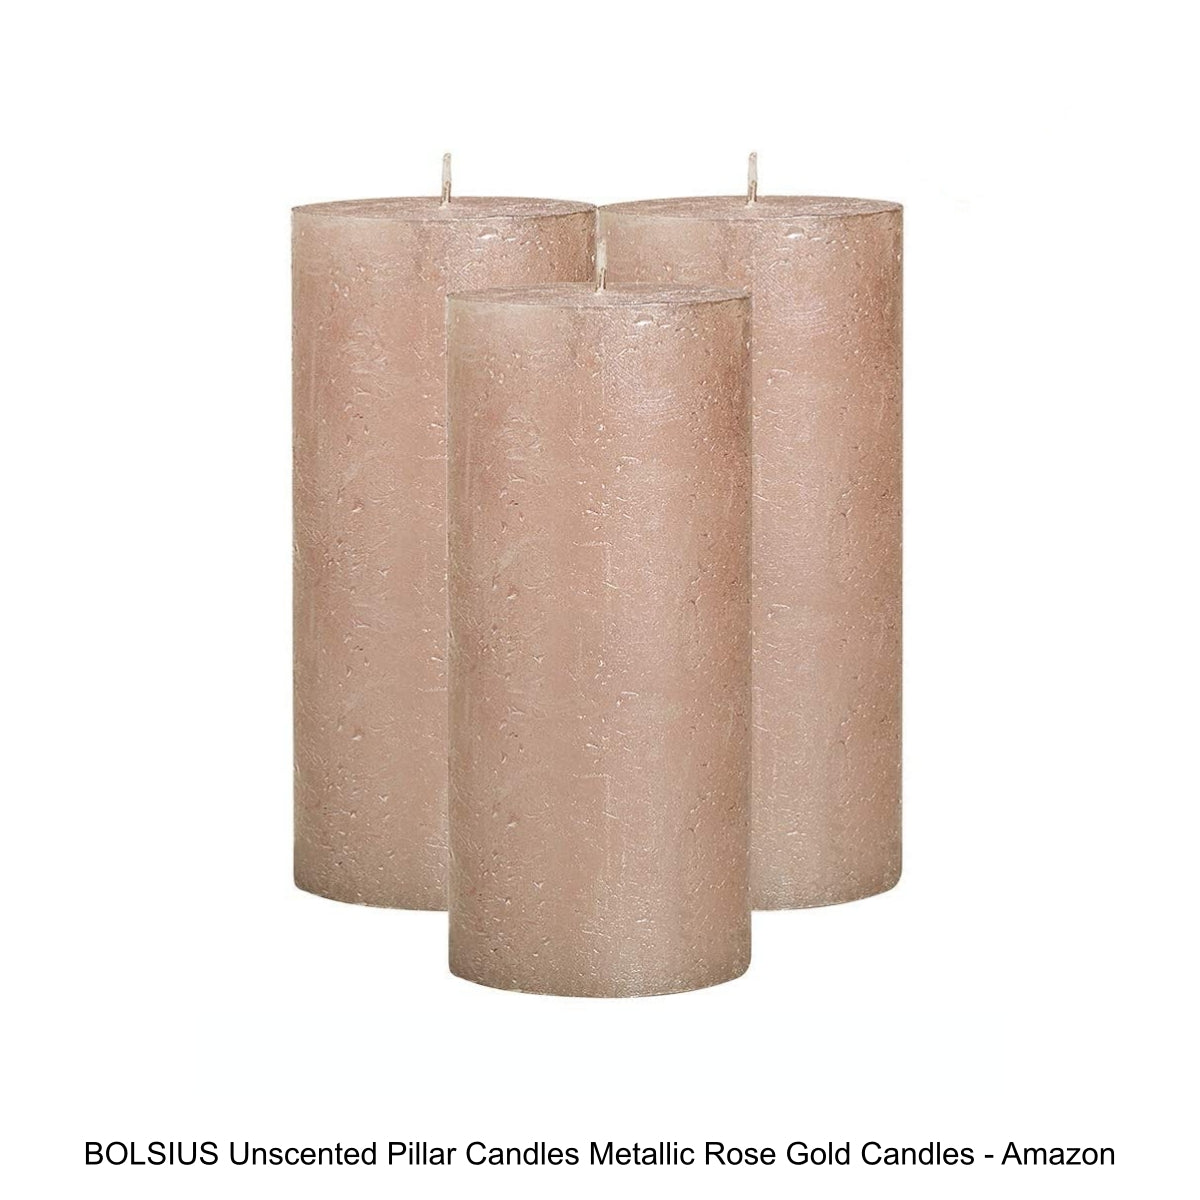 BOLSIUS Unscented Pillar Candles Metallic Rose Gold Candles - Amazon